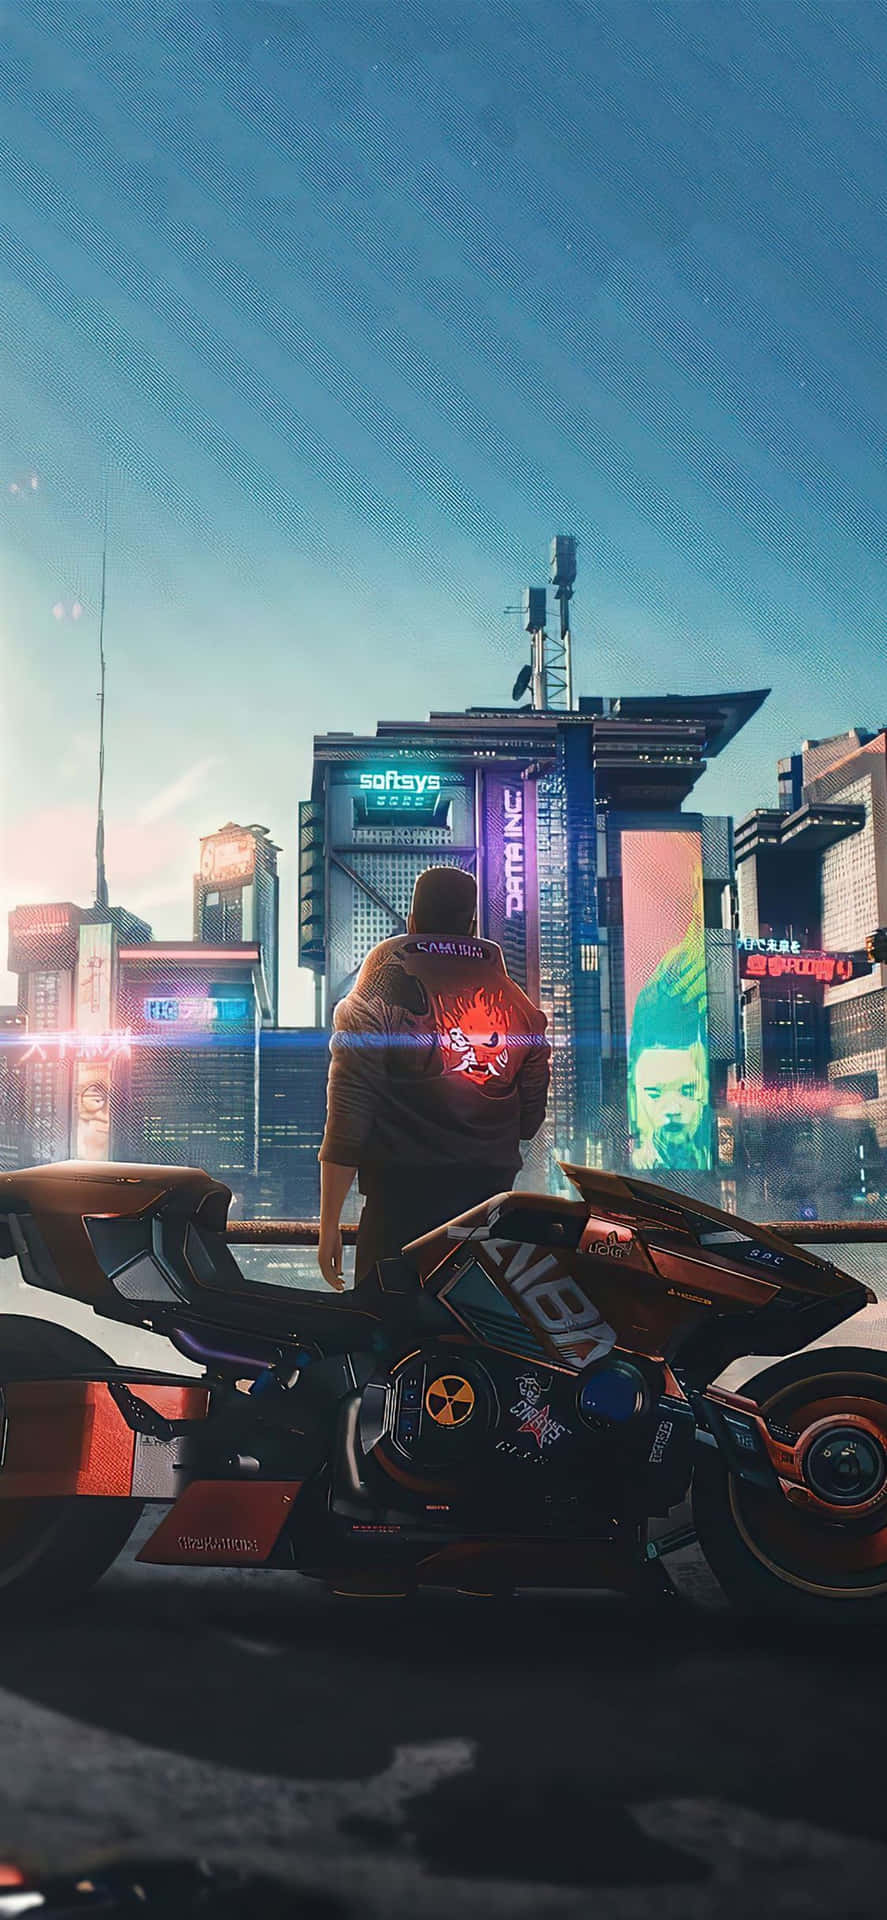 Iphonex Bakgrundsbild Cyberpunk 2077 Man Med En Motorcykel.